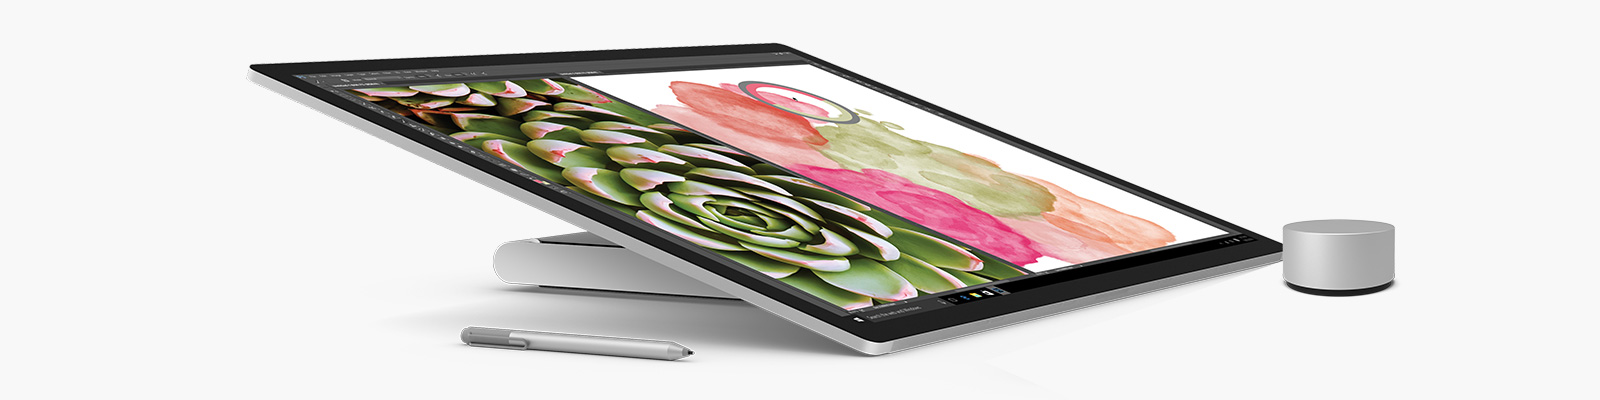 Surface Studio (11).jpg